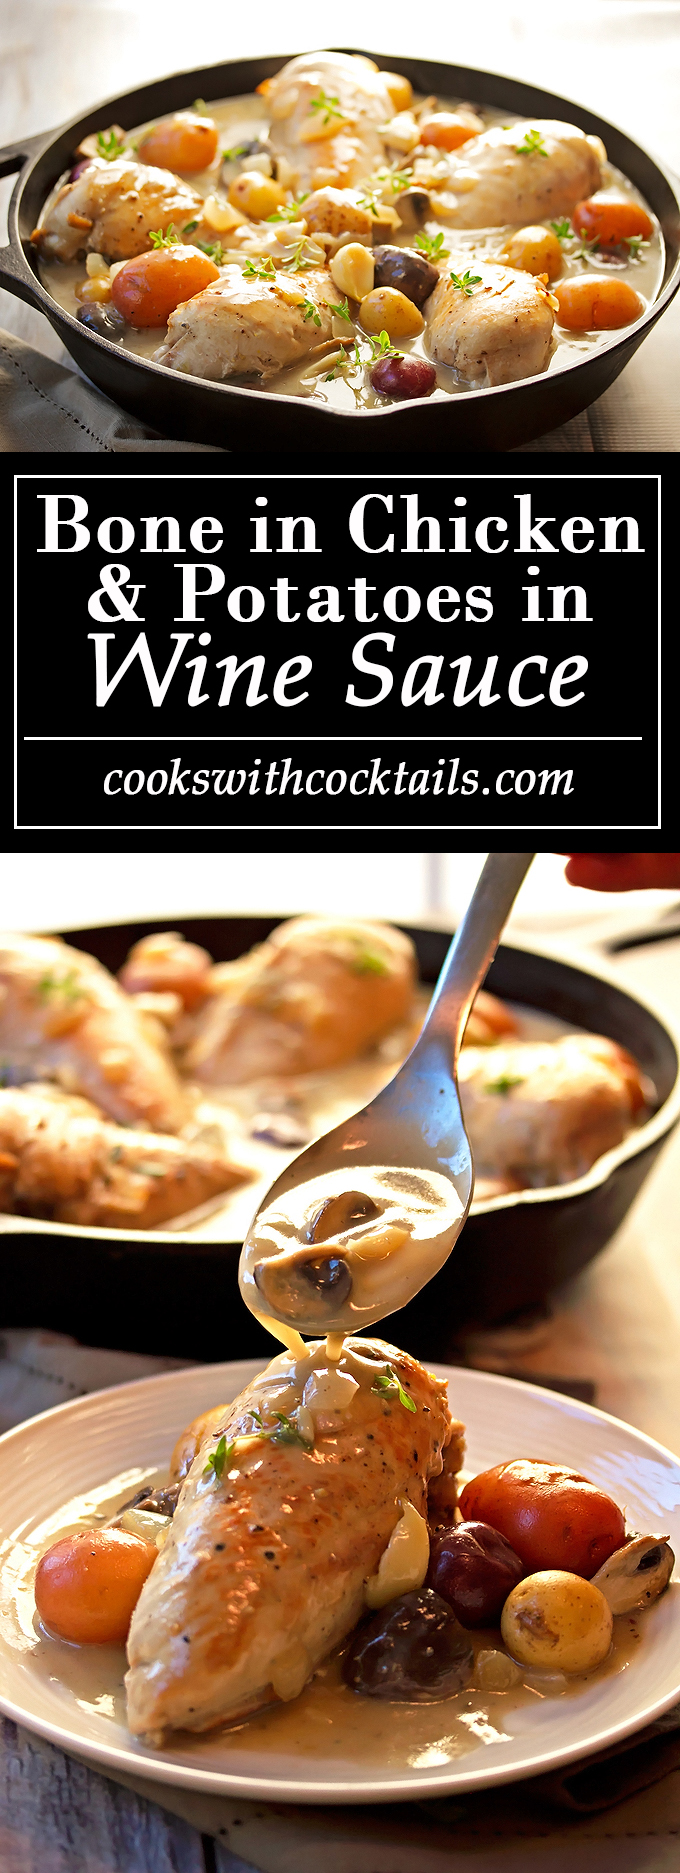 Bone-In Chicken & Potatoes in Wine Sauce